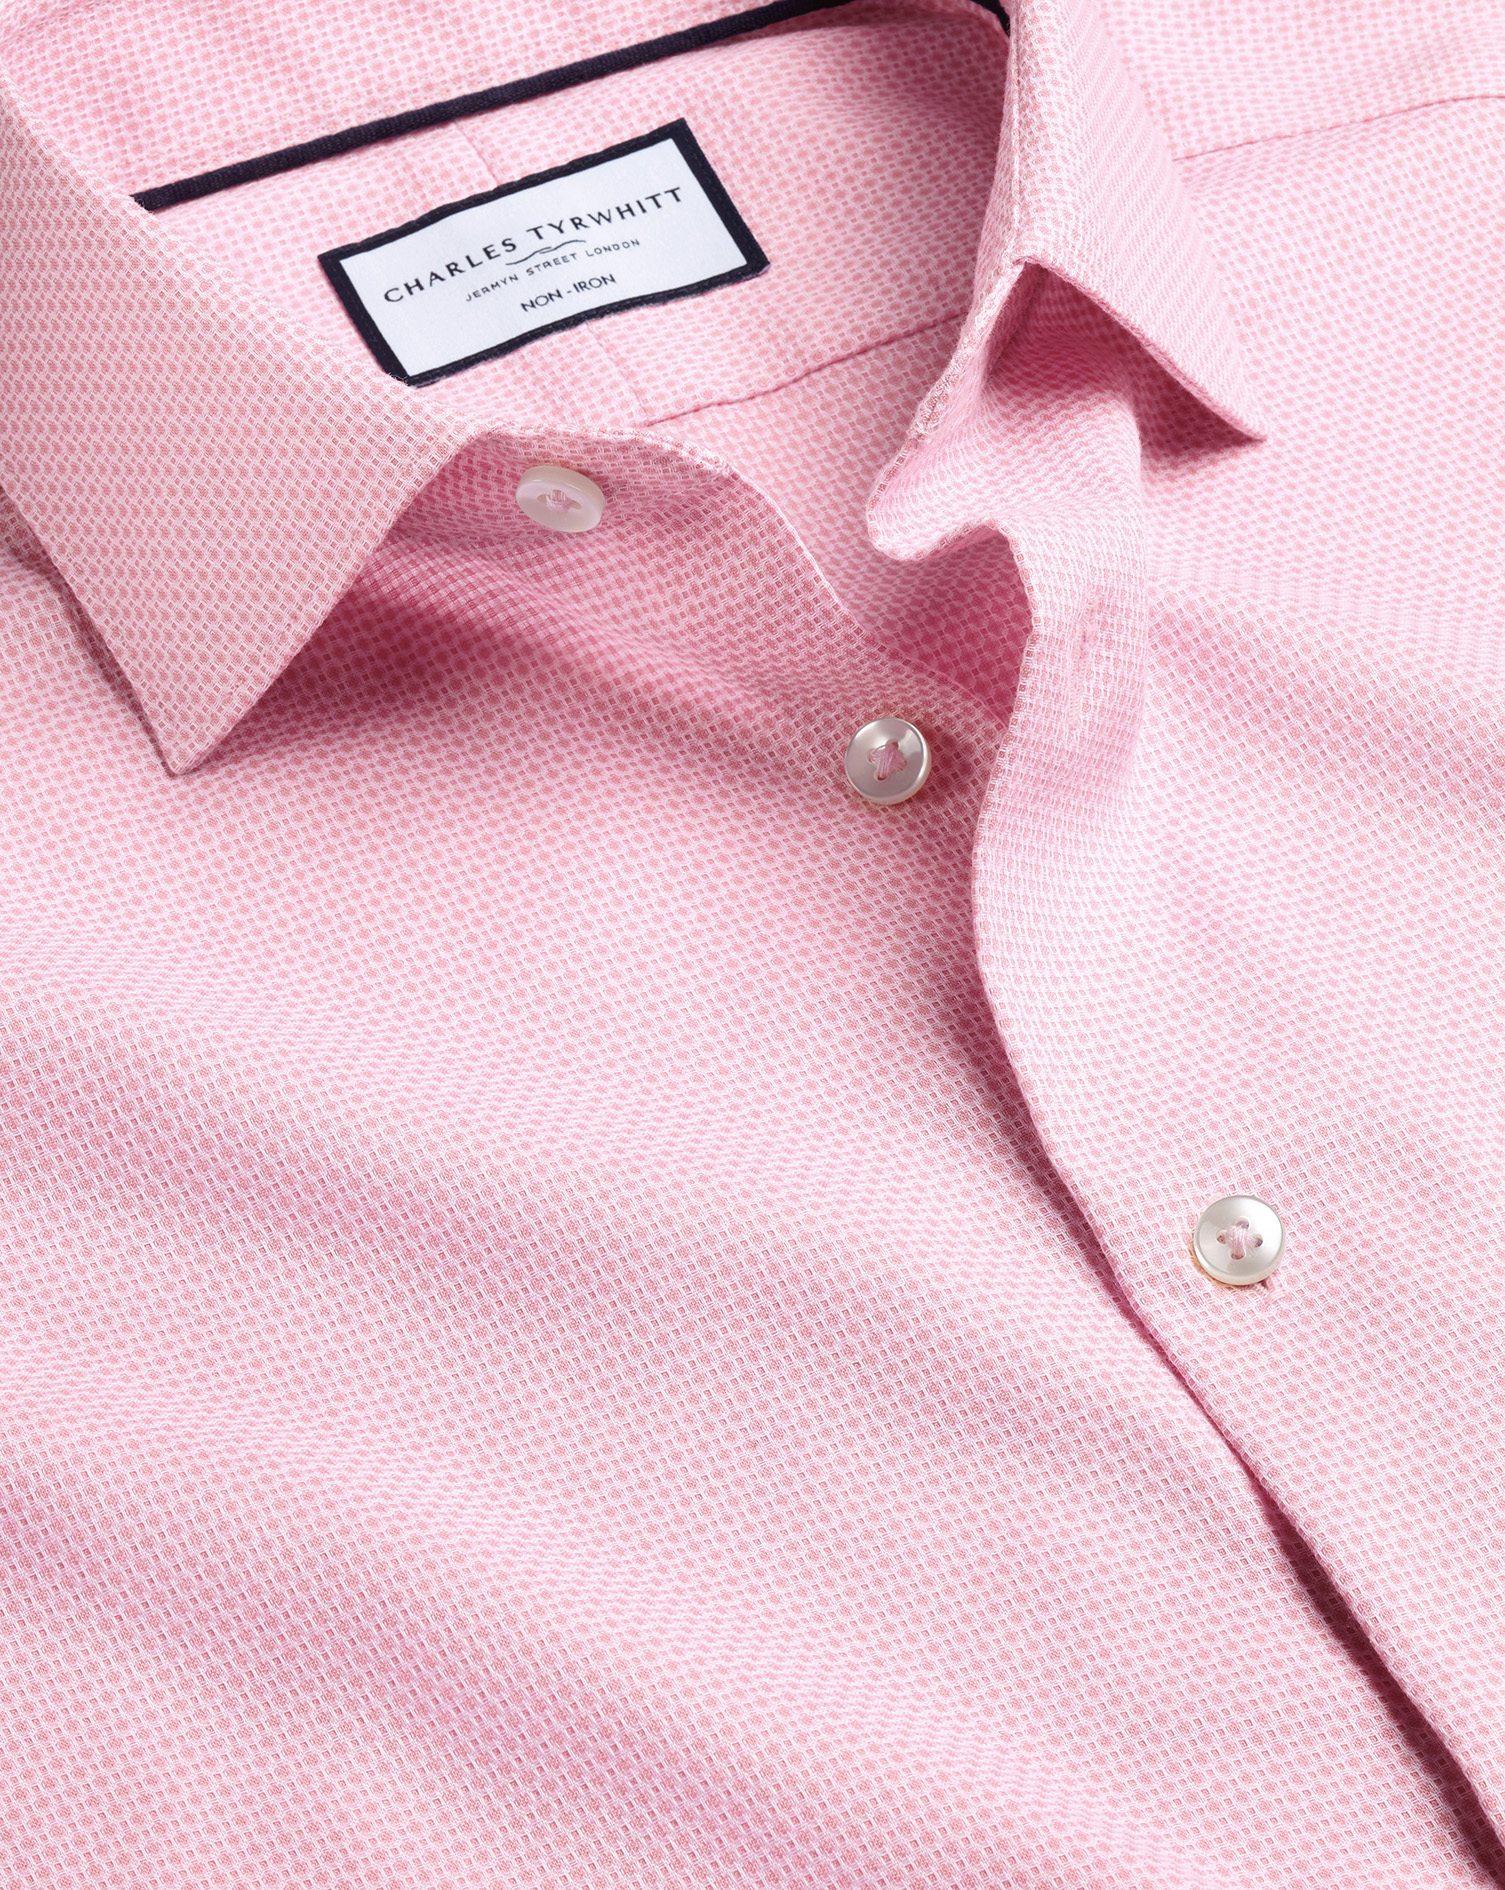 Men's Charles Tyrwhitt Non-Iron Stretch Texture Oval Dress Shirt - Pink Single Cuff Size 17/36 Cotto